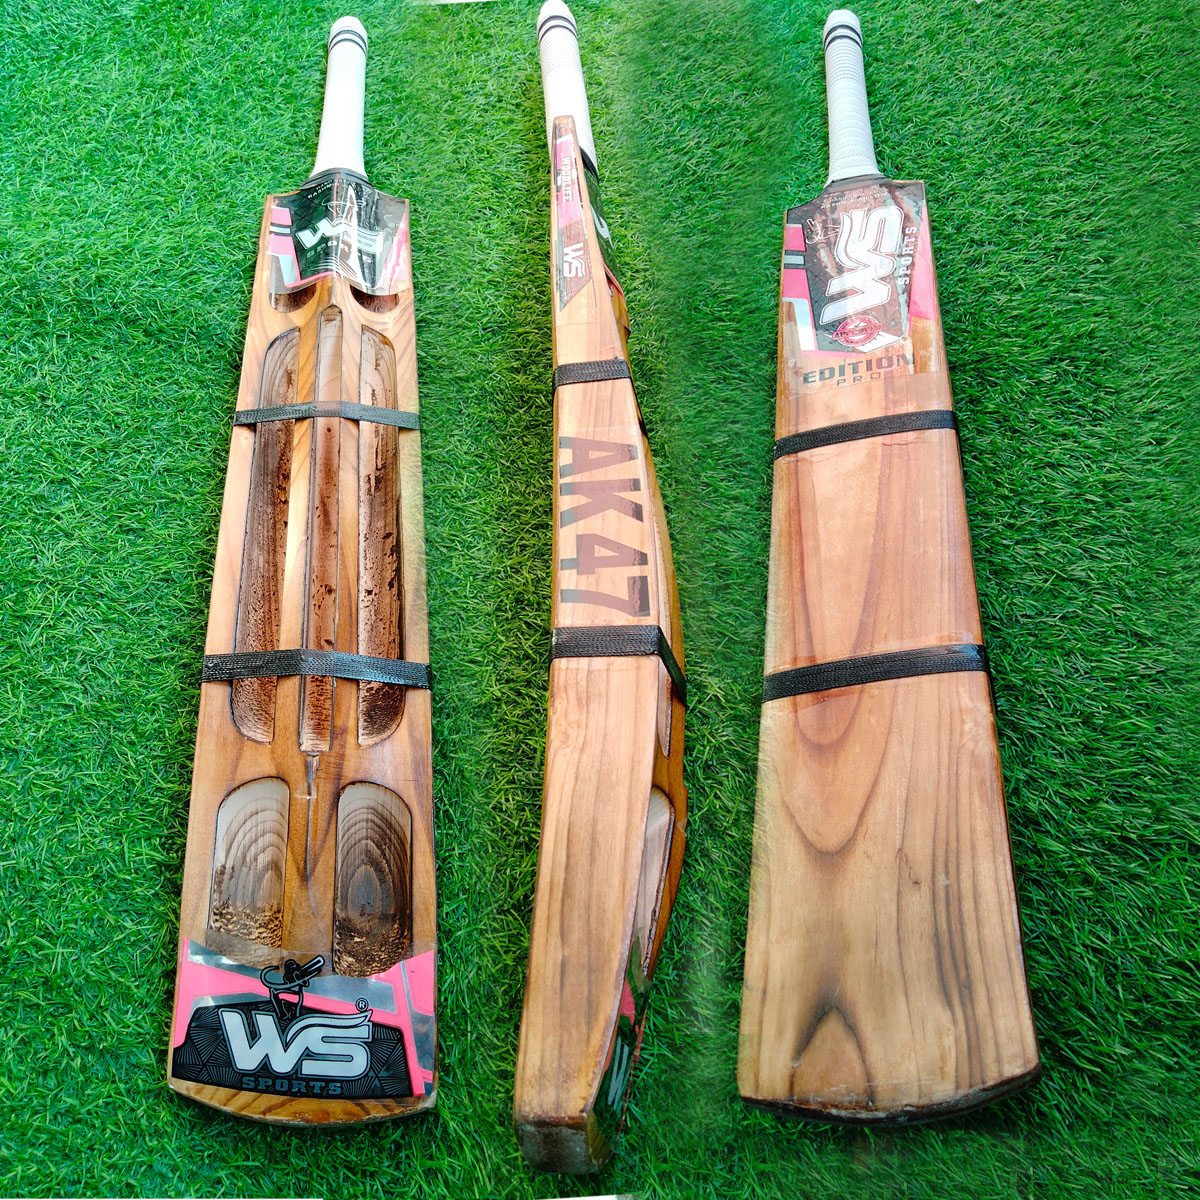 WS Edition Pro Hard tennis Cricket bat